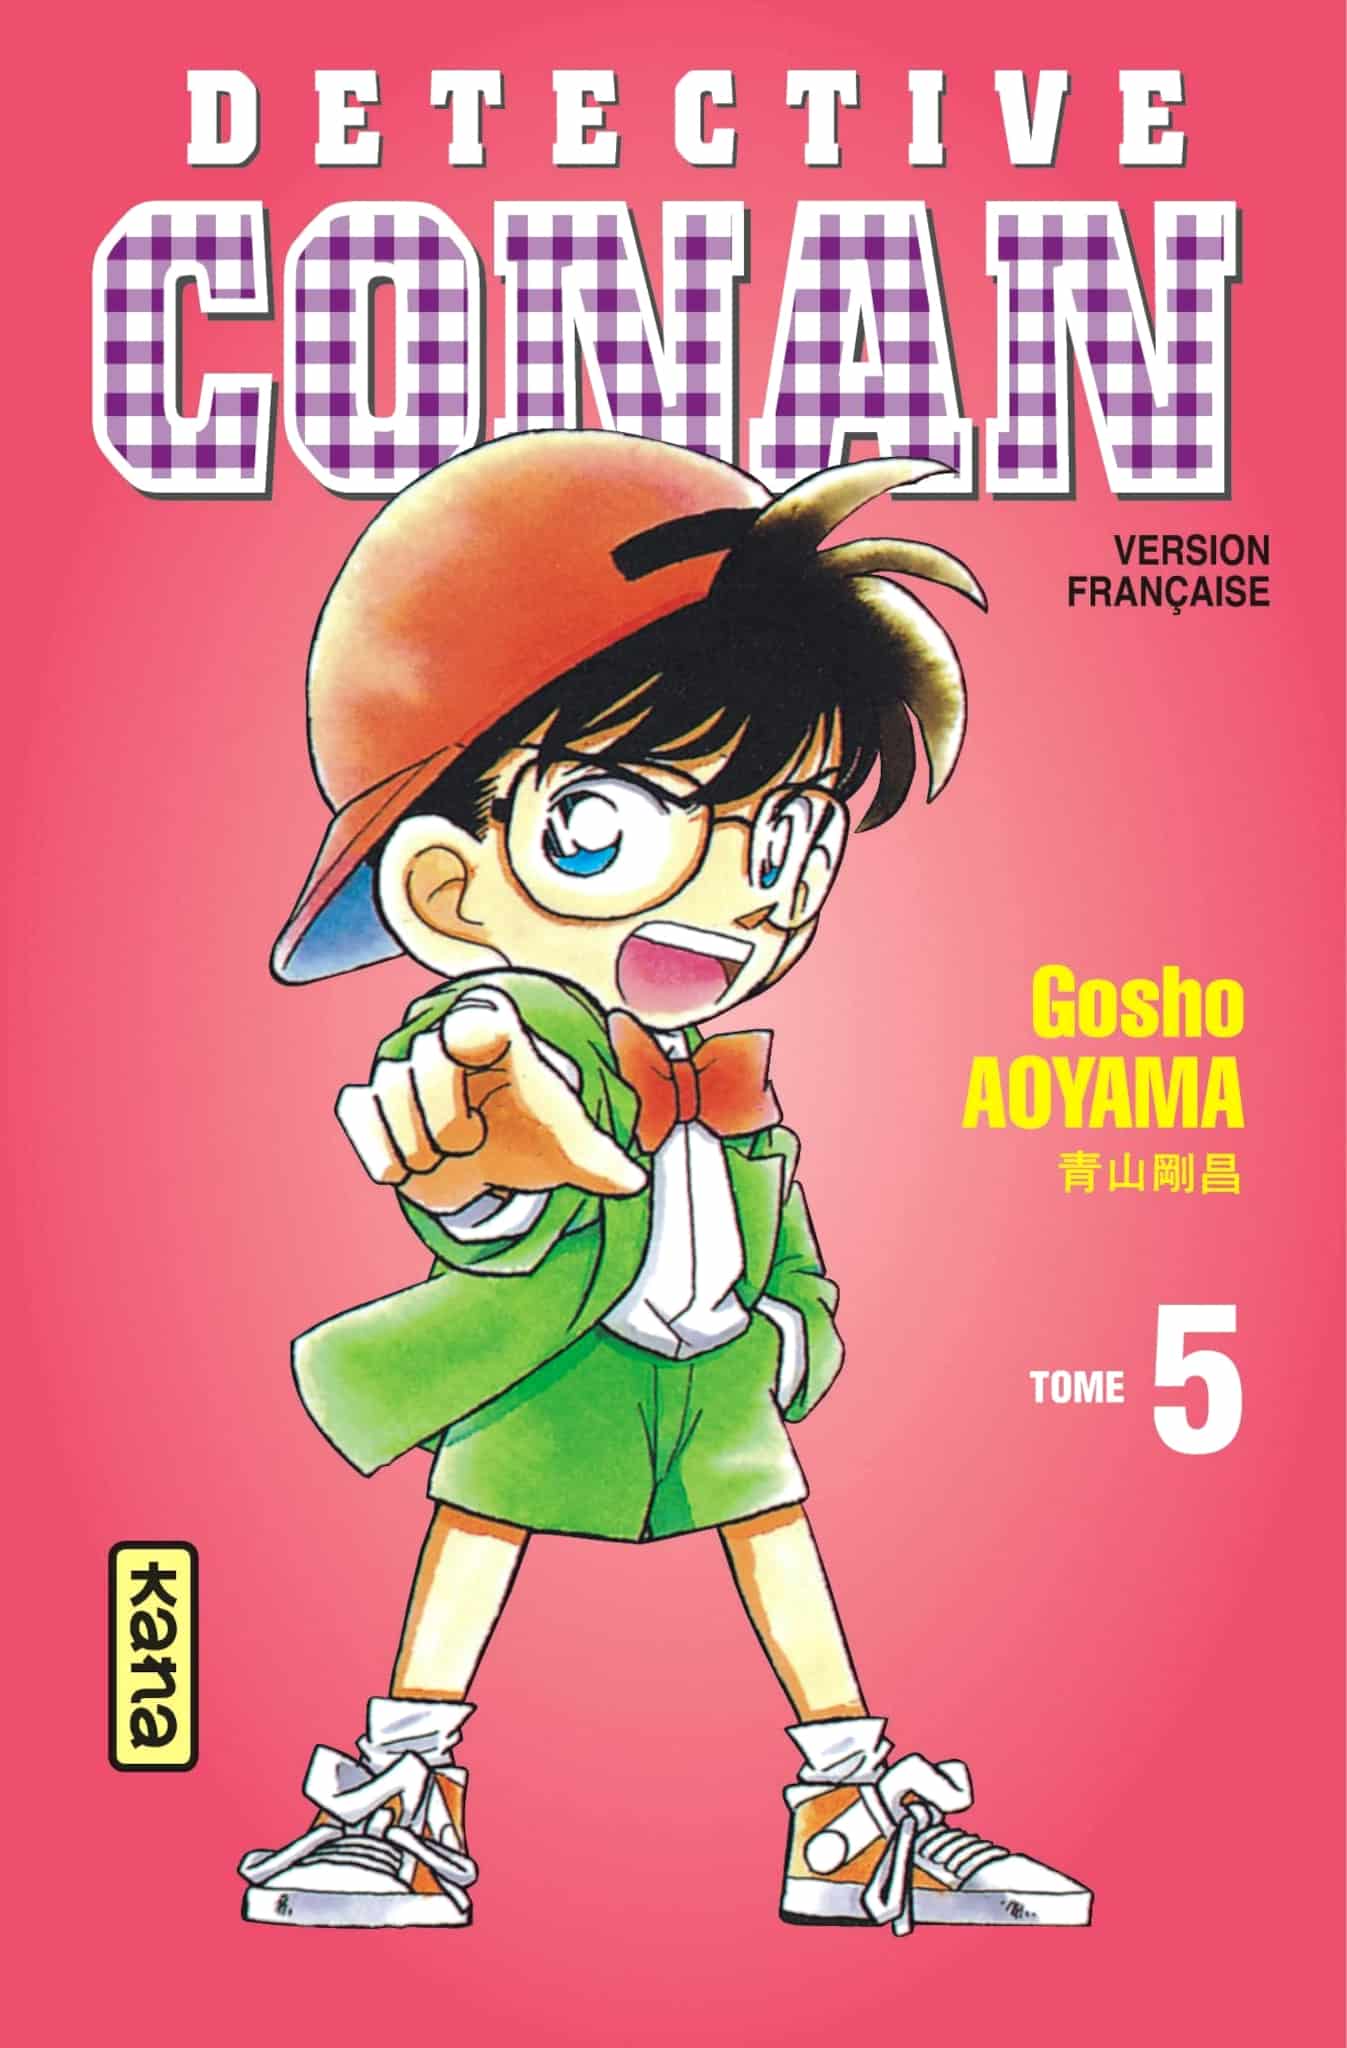 Tome 5 du manga Detective Conan